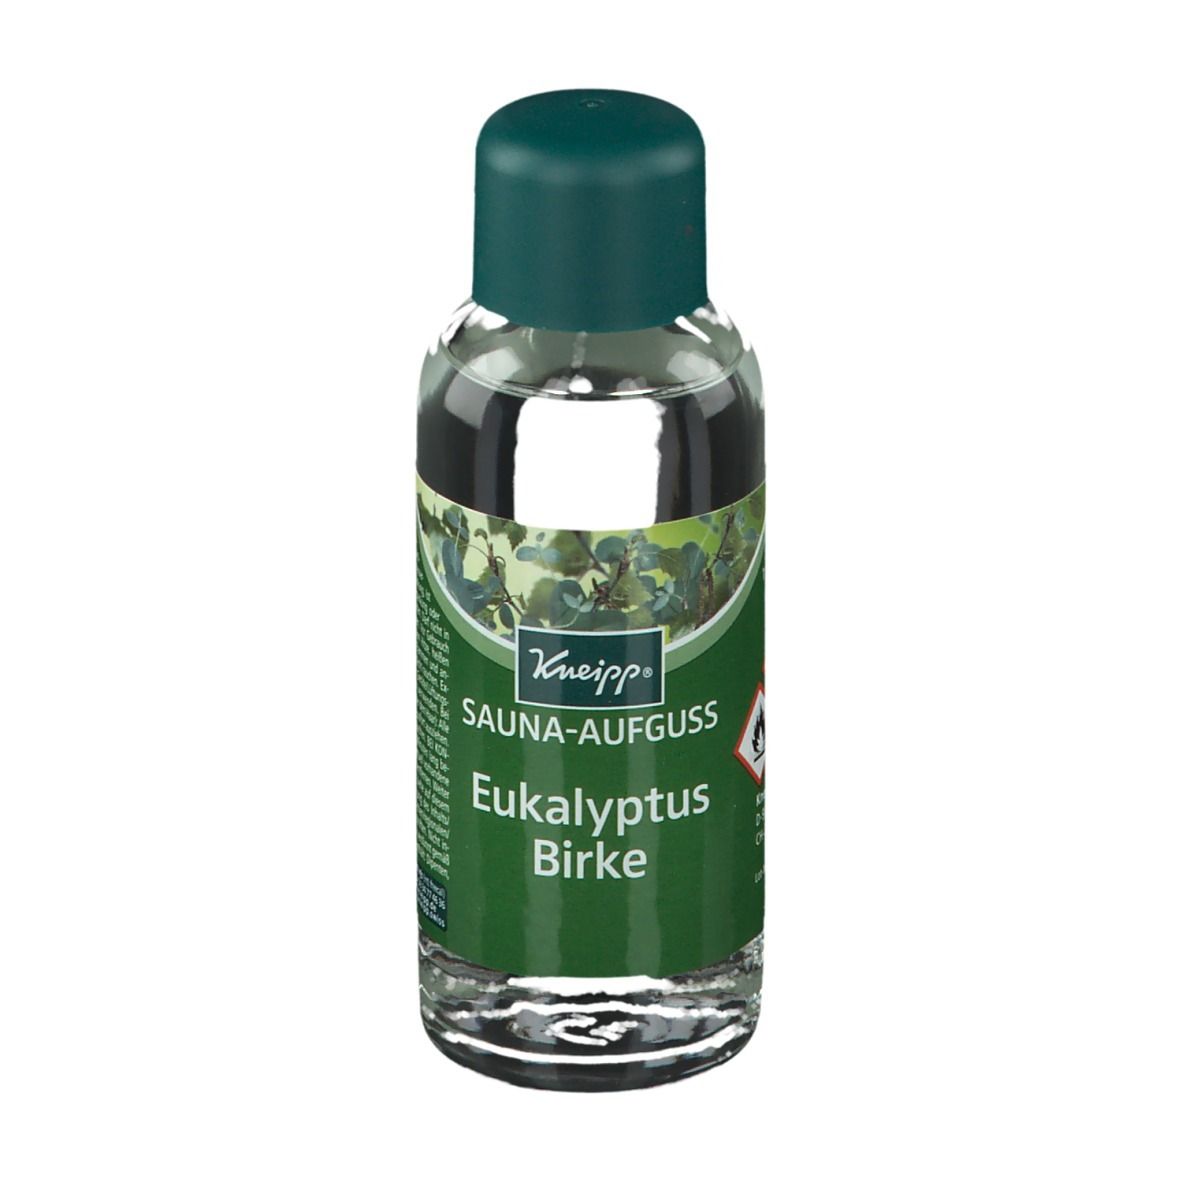 Kneipp® Sauna-Aufguss Eukalyptus Birke